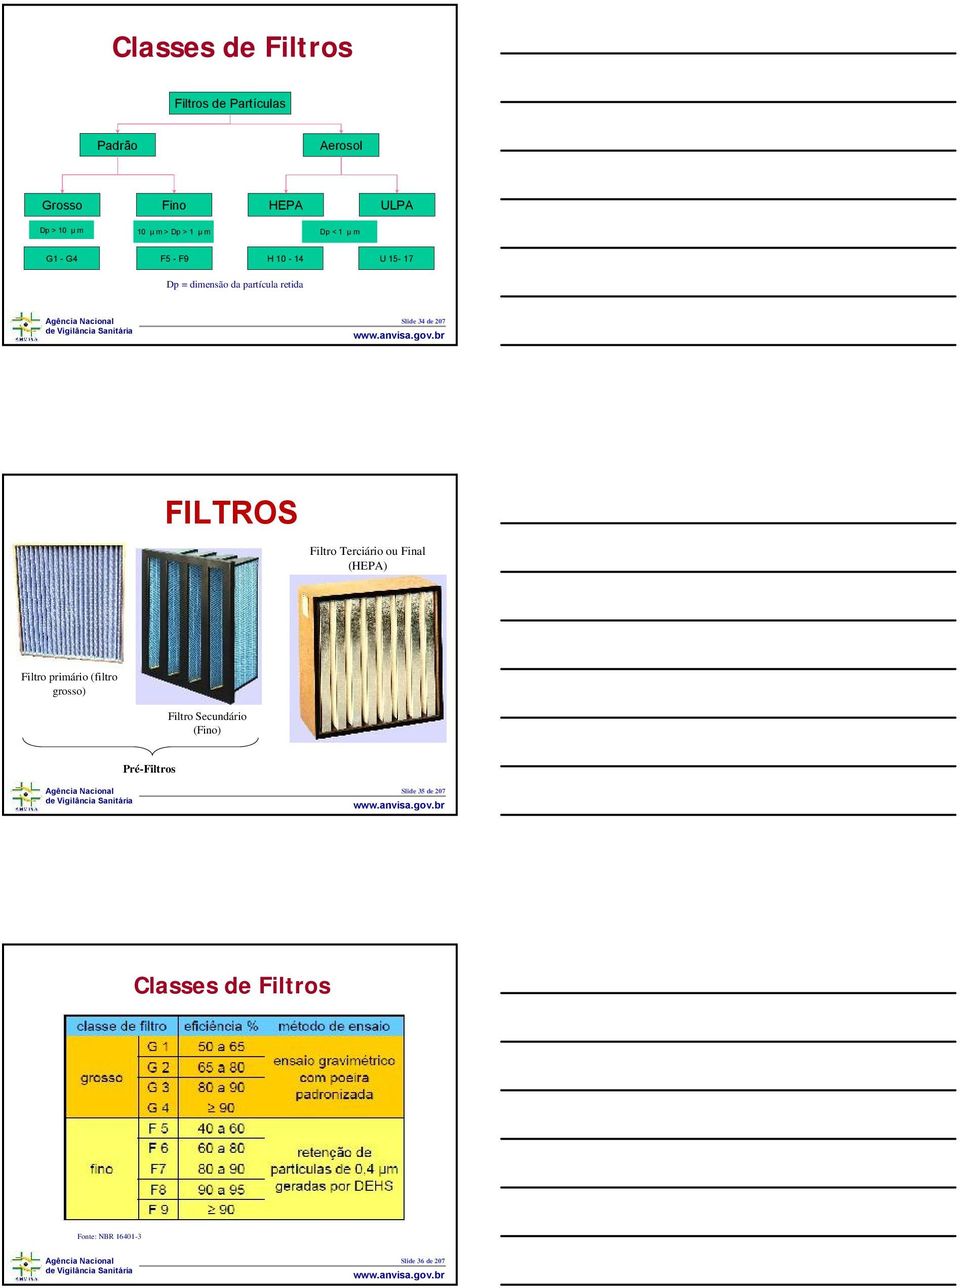 1822 Standard Slide 34 de 207 FILTROS Filtro Terciário ou Final (HEPA) Filtro primário (filtro grosso)